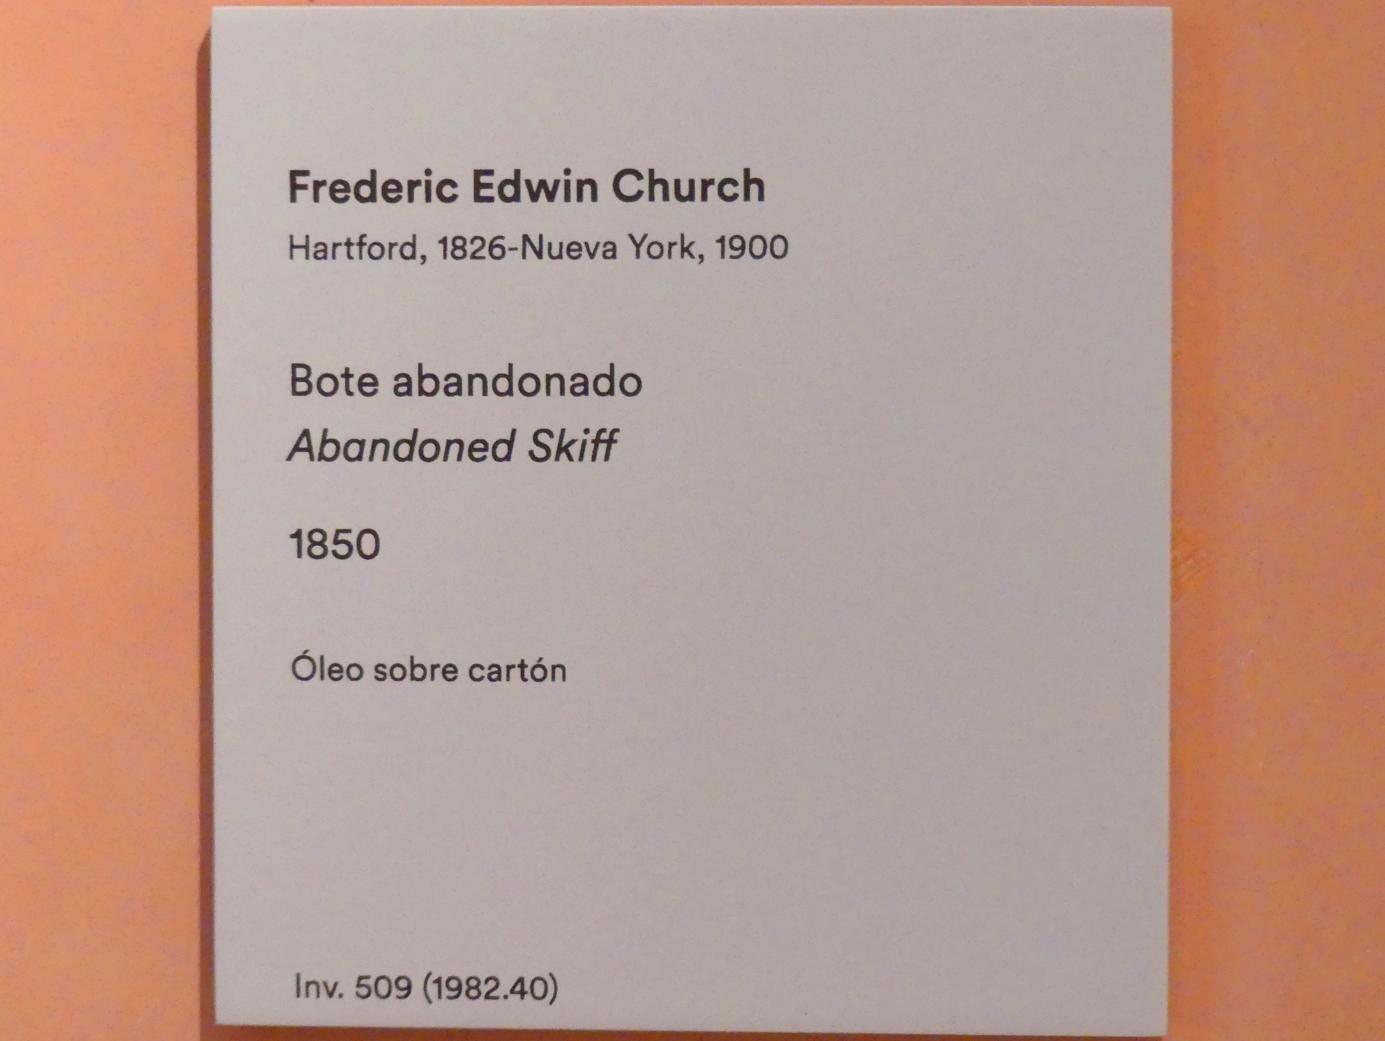 Frederic Edwin Church (1850–1877), Verlassenes Boot, Madrid, Museo Thyssen-Bornemisza, Saal 29, nordamerikanische Malerei des 19. Jahrhunderts, 1850, Bild 2/2